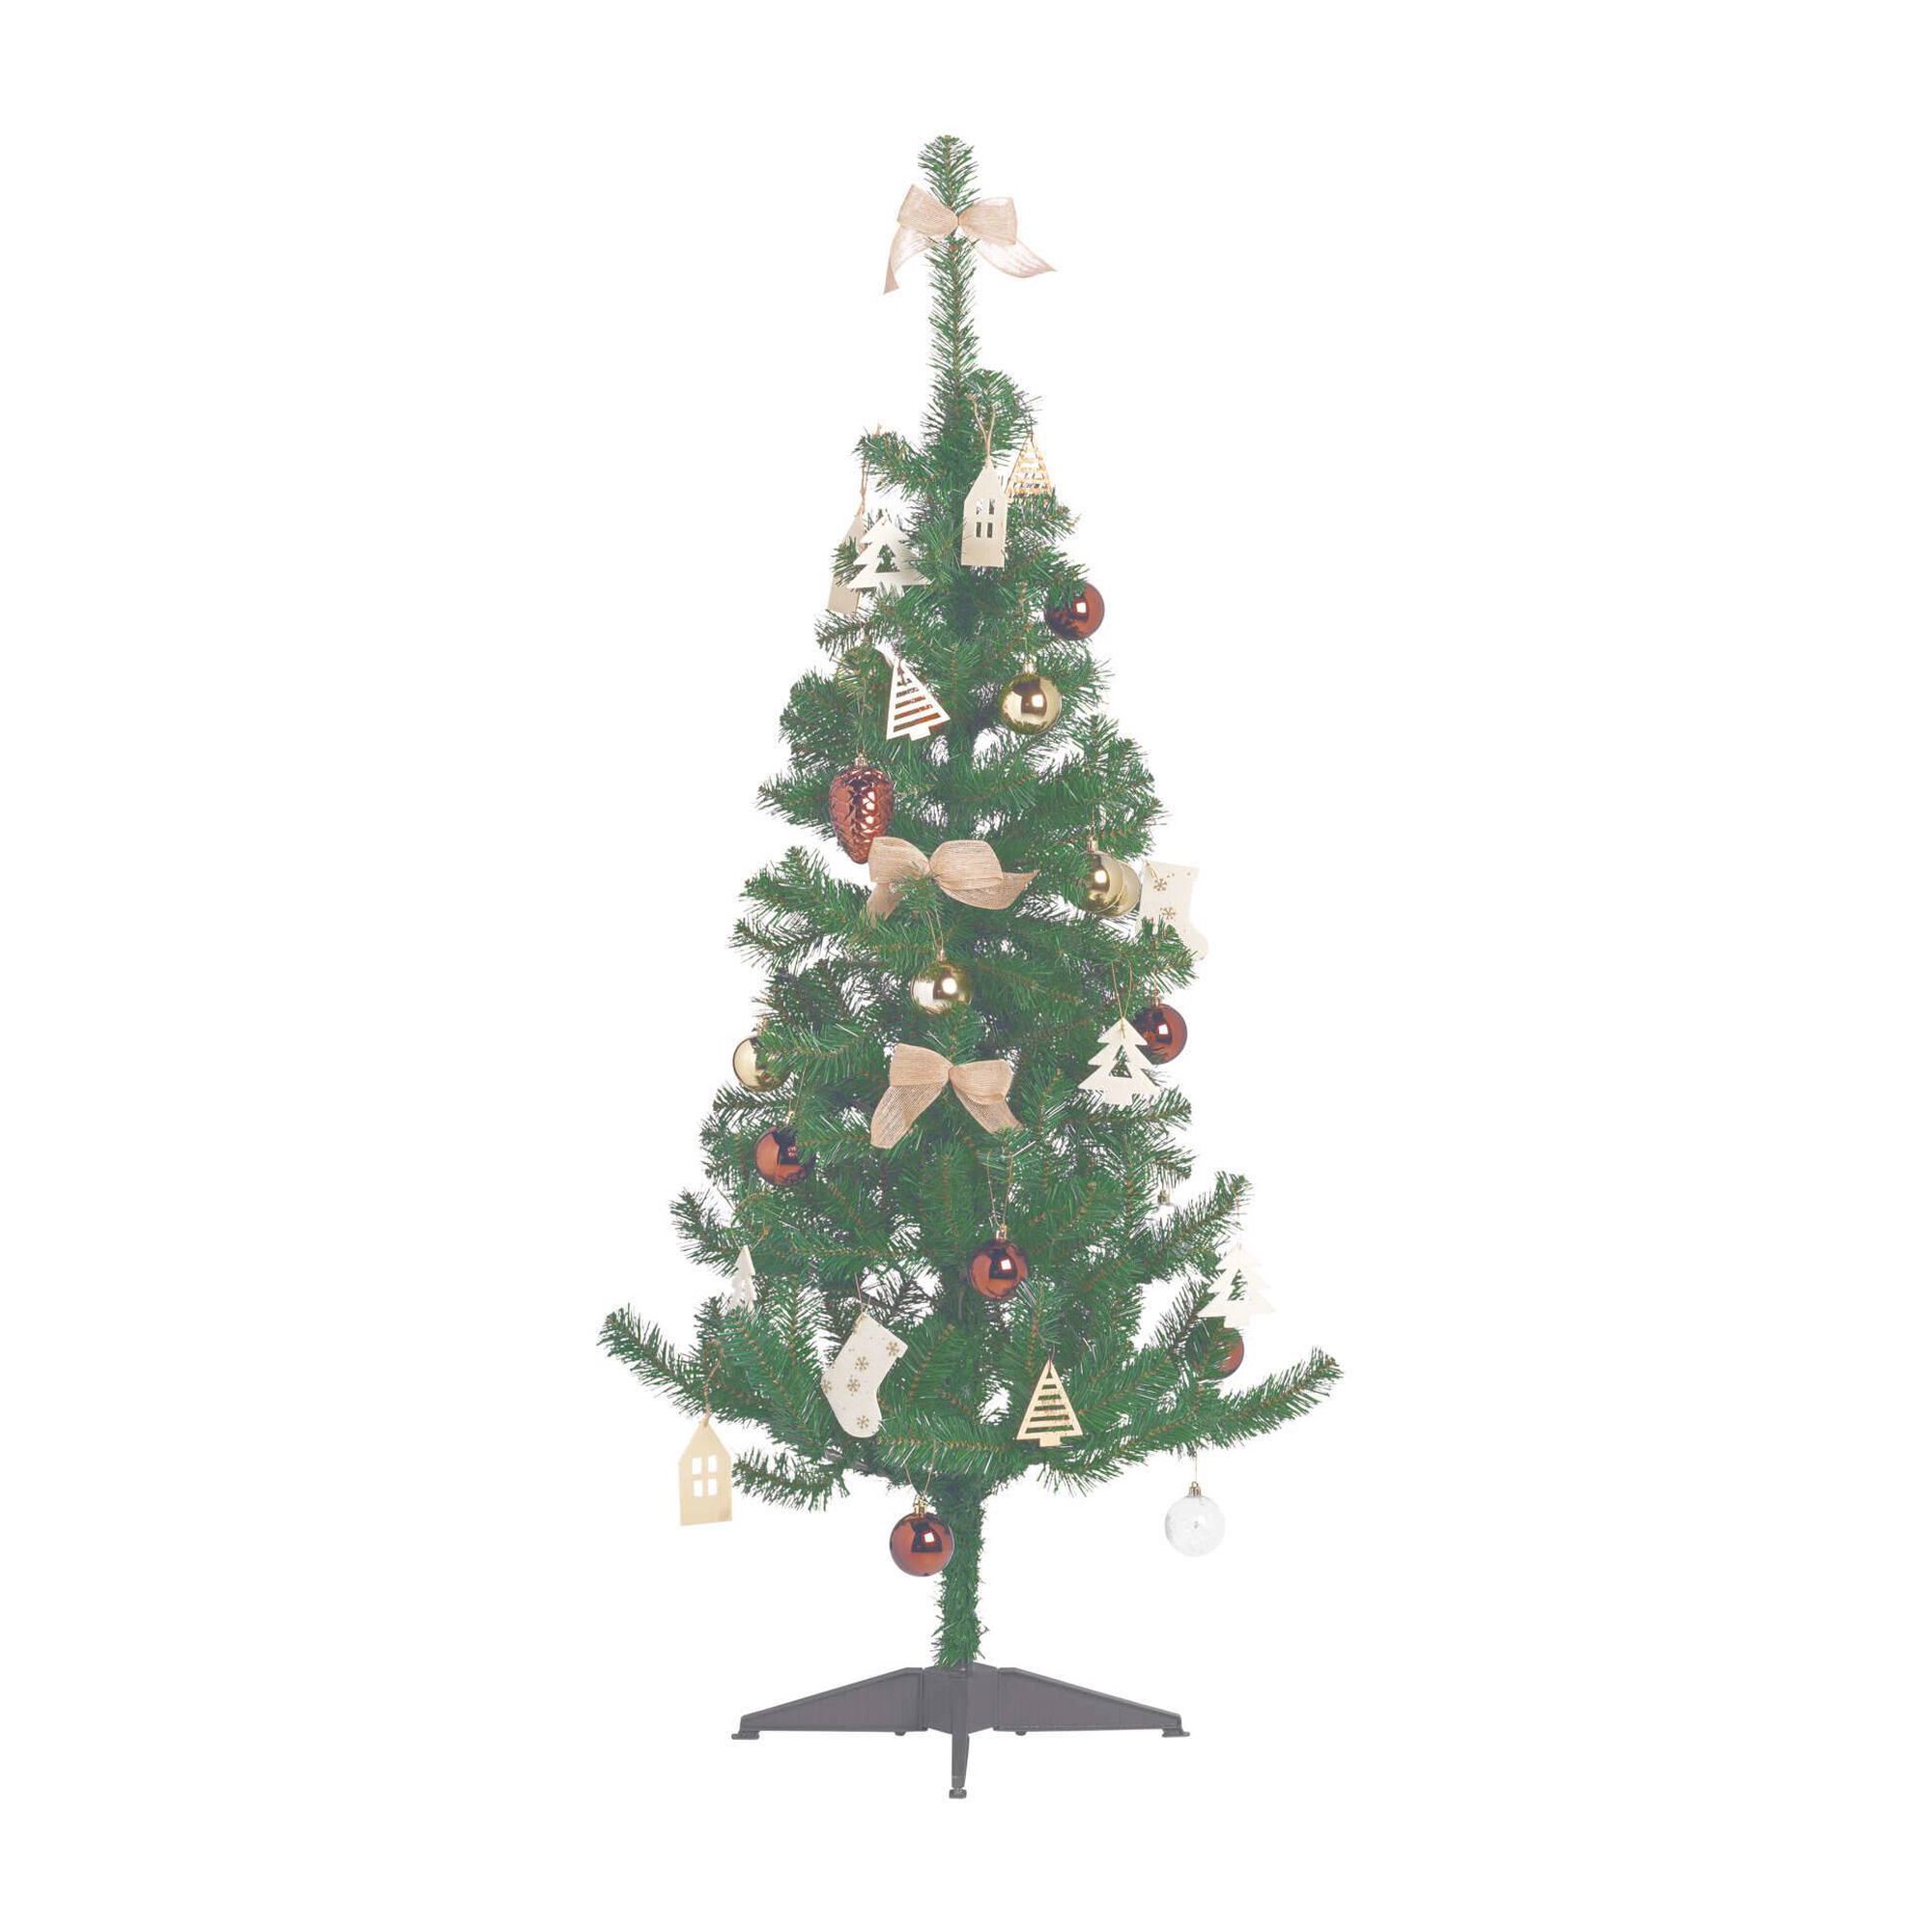 Árvore Natal Decorada Nº20 150cm Dourada - 1 un - Kasa